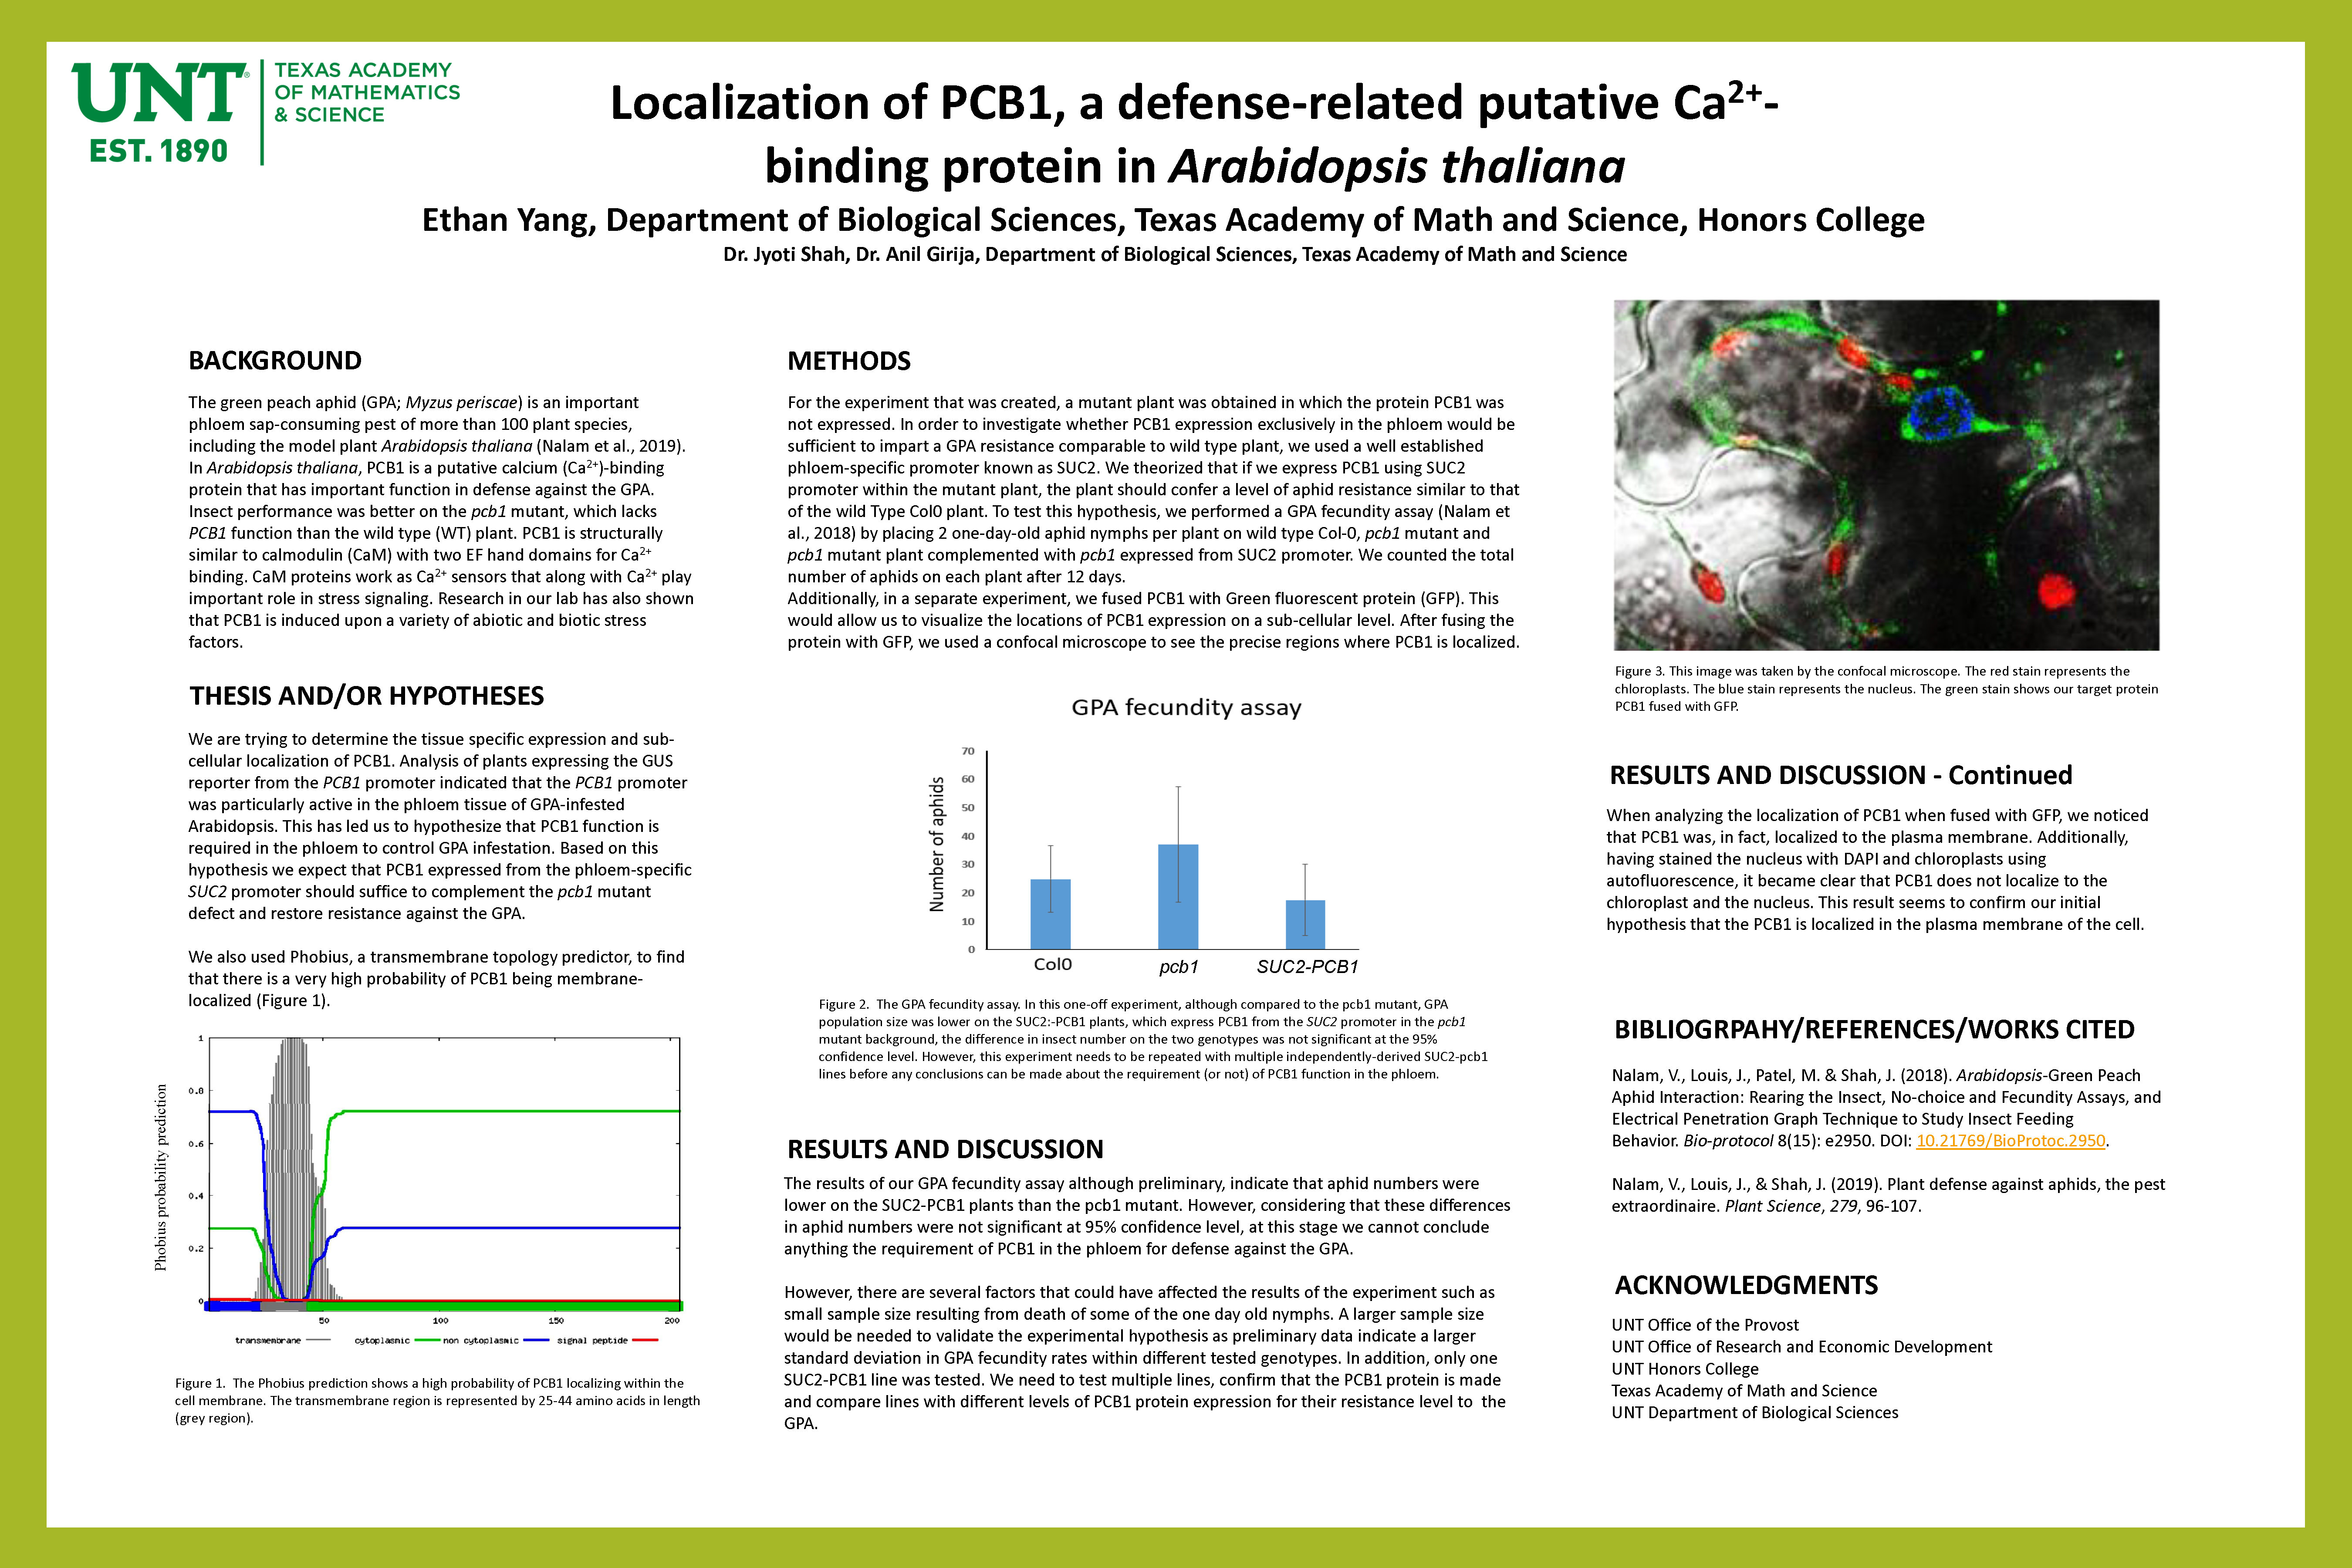 Localization of PCB1, a defense-related putative calcium-binding protein in Arabidopsis thaliana